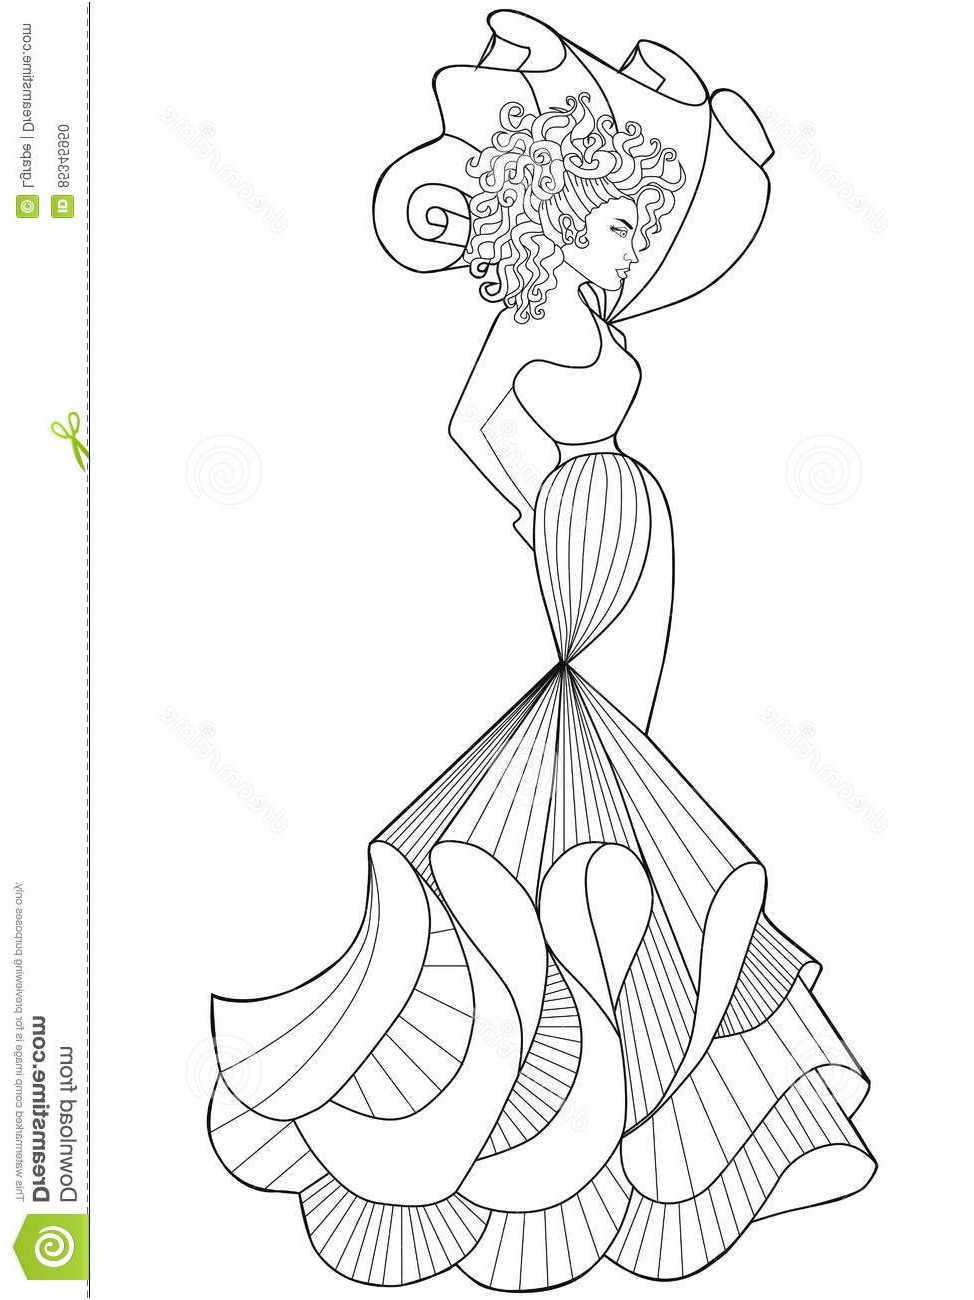 illustration stock page livre coloriage des adultes femme longue robe mode image